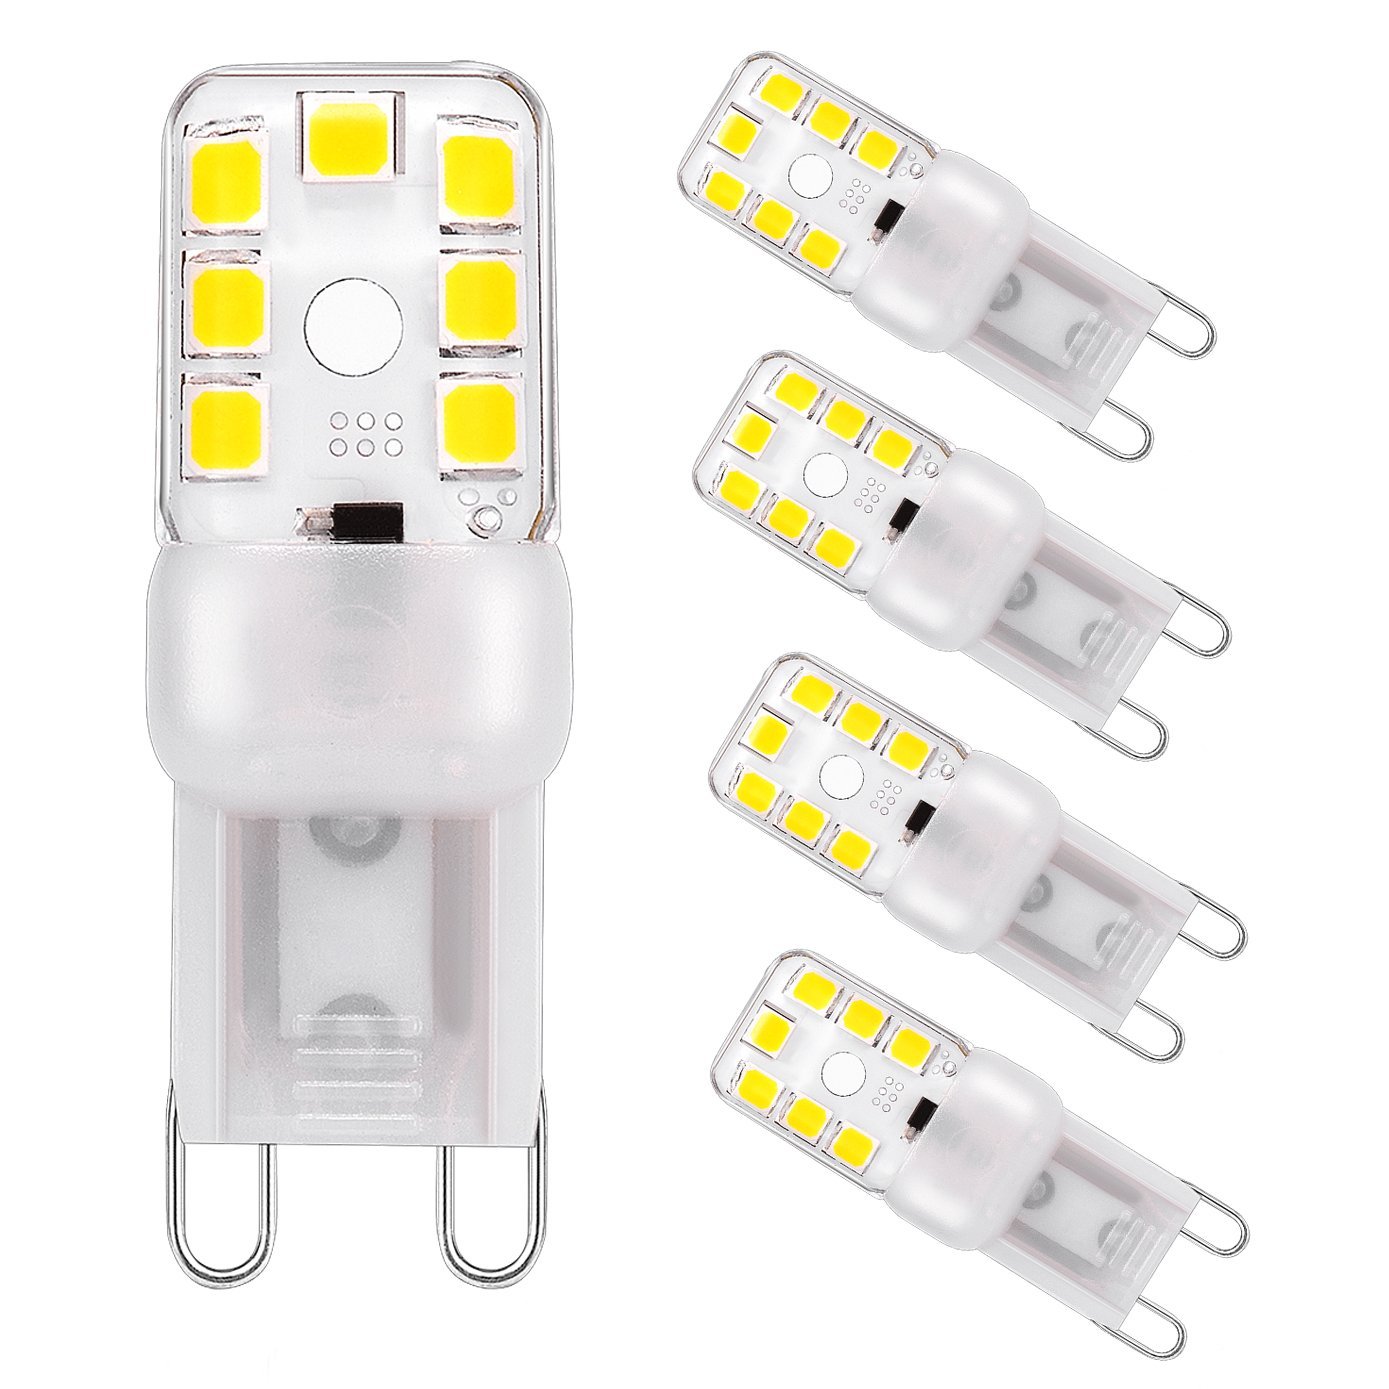 G9 LED Bulb Dimmable 3W Daylight White - Halogen ,Warm White G9 Base Chandeliers Bathroom Ceiling Lights Energy Saving Bulbs AC120V （pack of 5) - I-SHUNFA